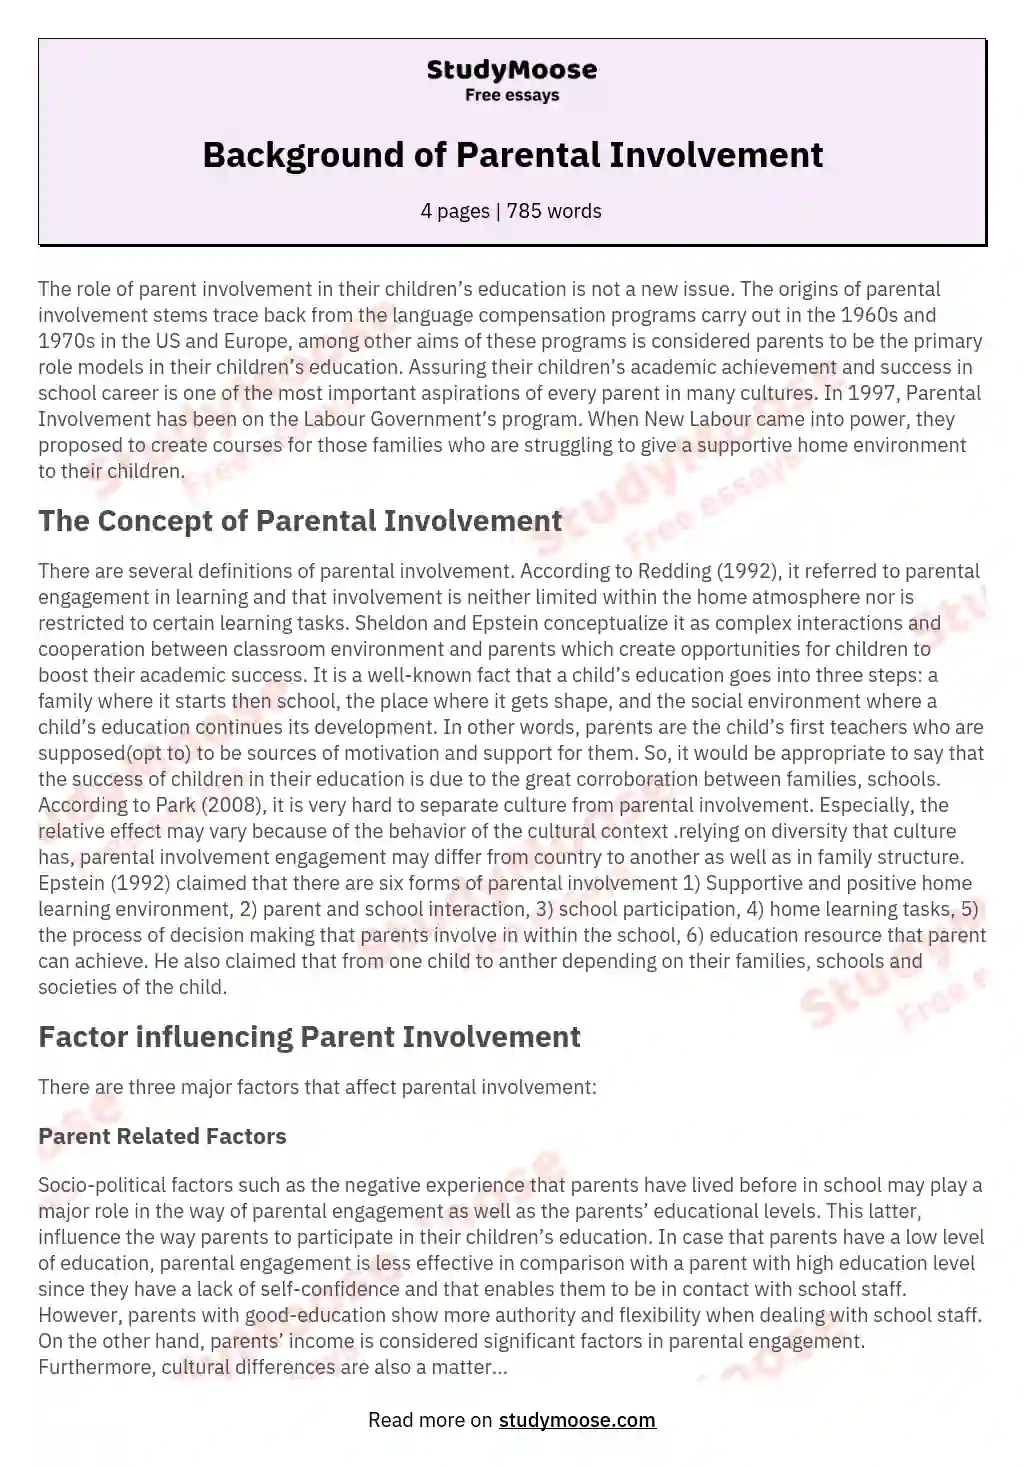 Background of Parental Involvement essay